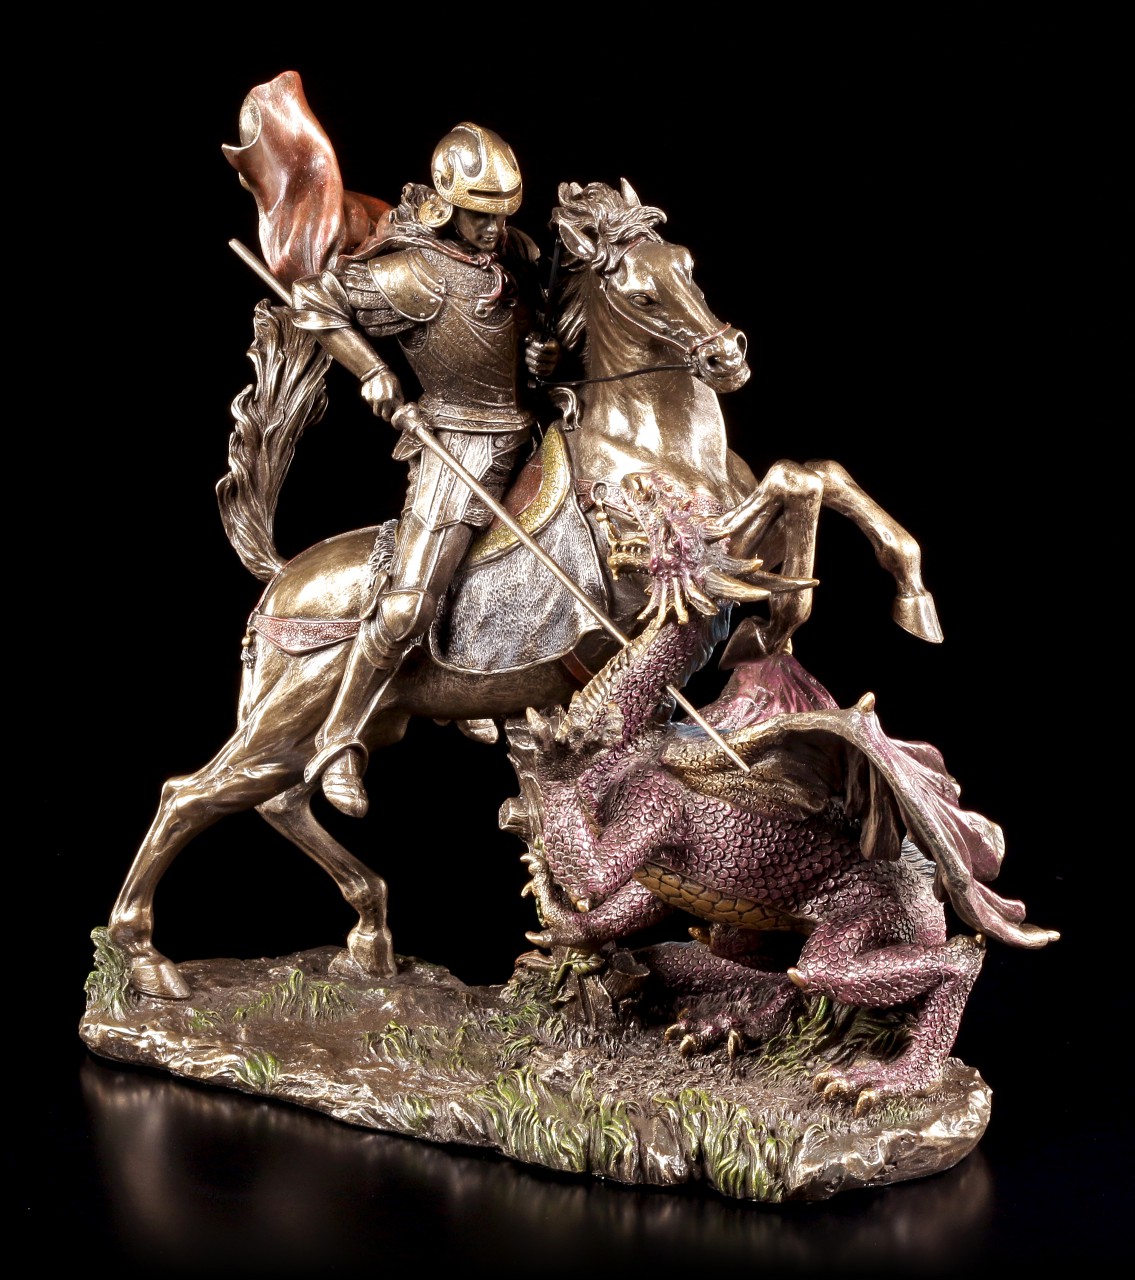 St. George Figurine - The Dragon Slayer